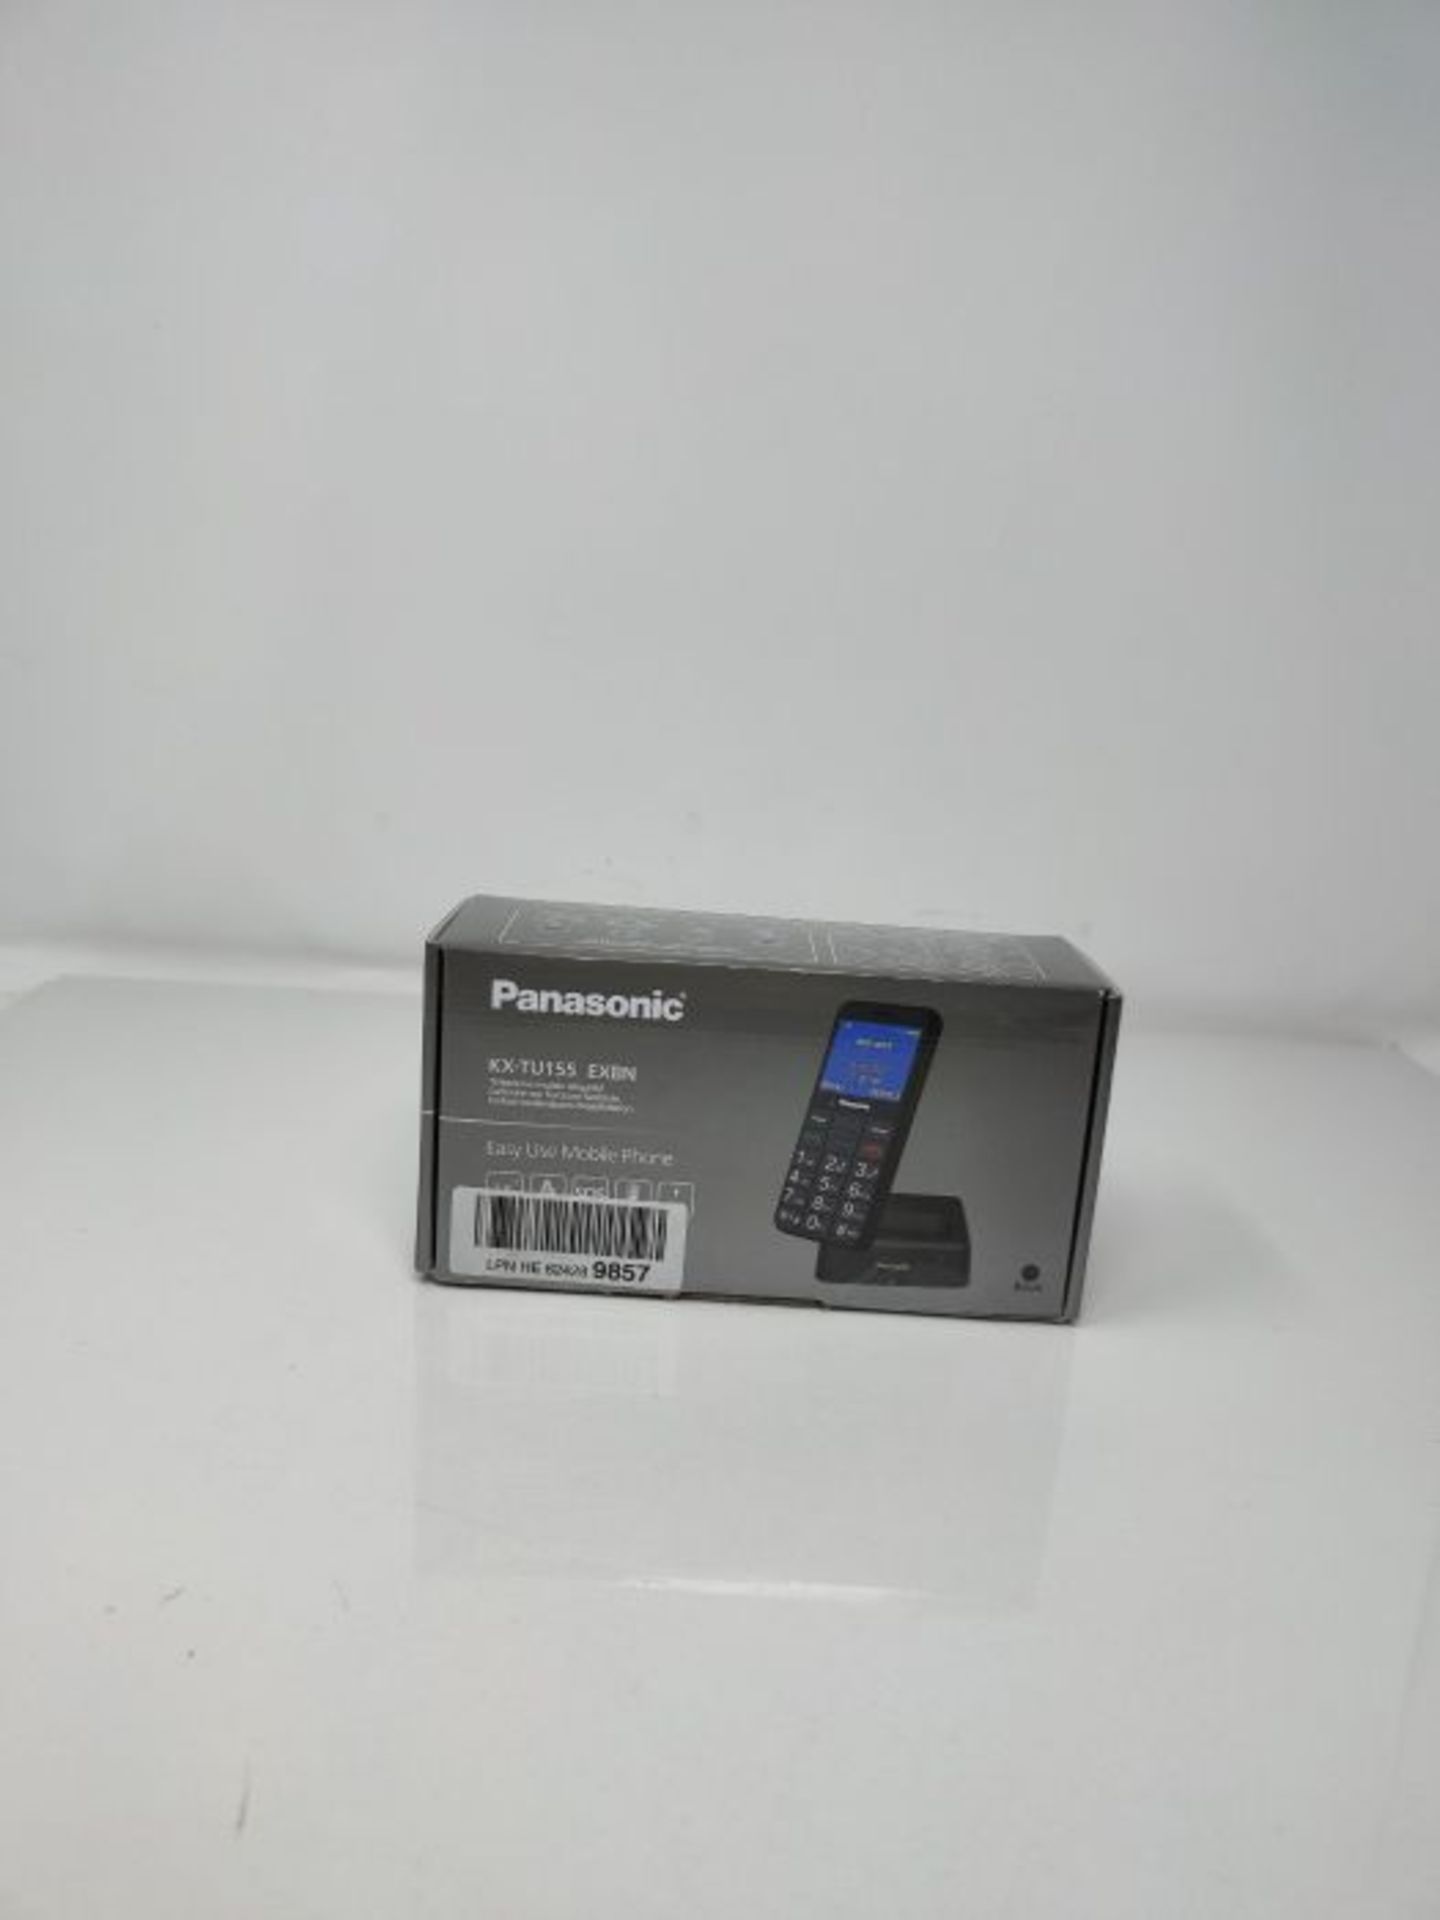 Panasonic KX-TU155EXBN Seniorenhandy (SOS-Notfalltaste, Hörgerätekompatibel, Taschen